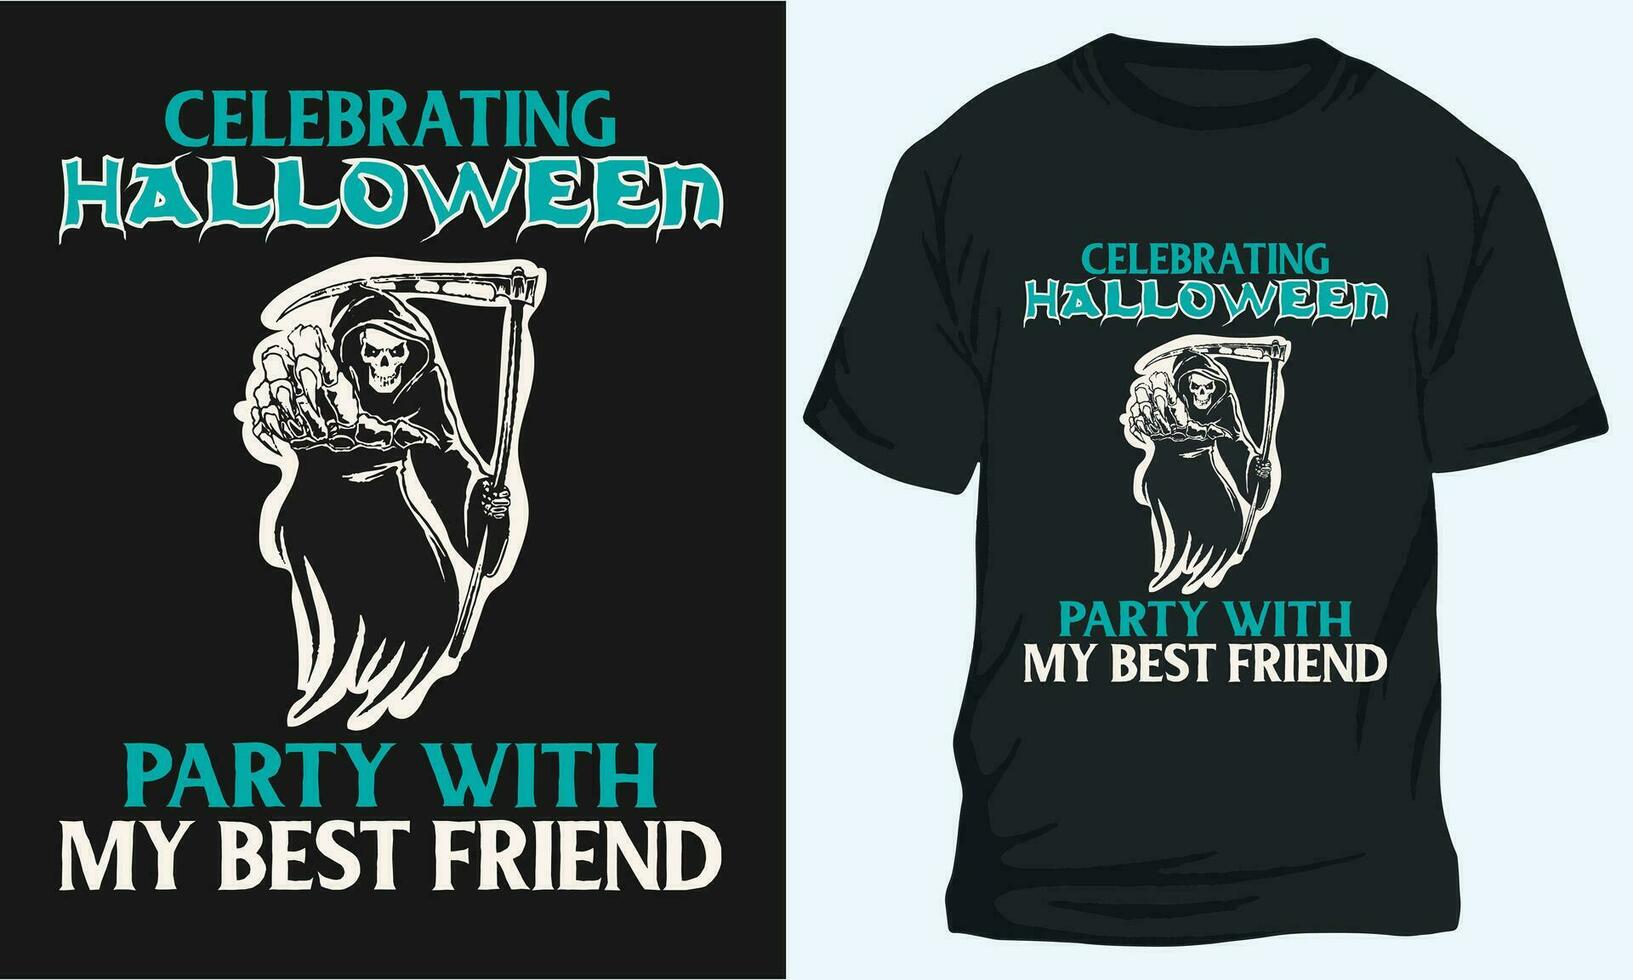 CELEBRATING HALLOWEEN PARTY WITH MY BEST FRIEND, Halloween t-shirt Design vector